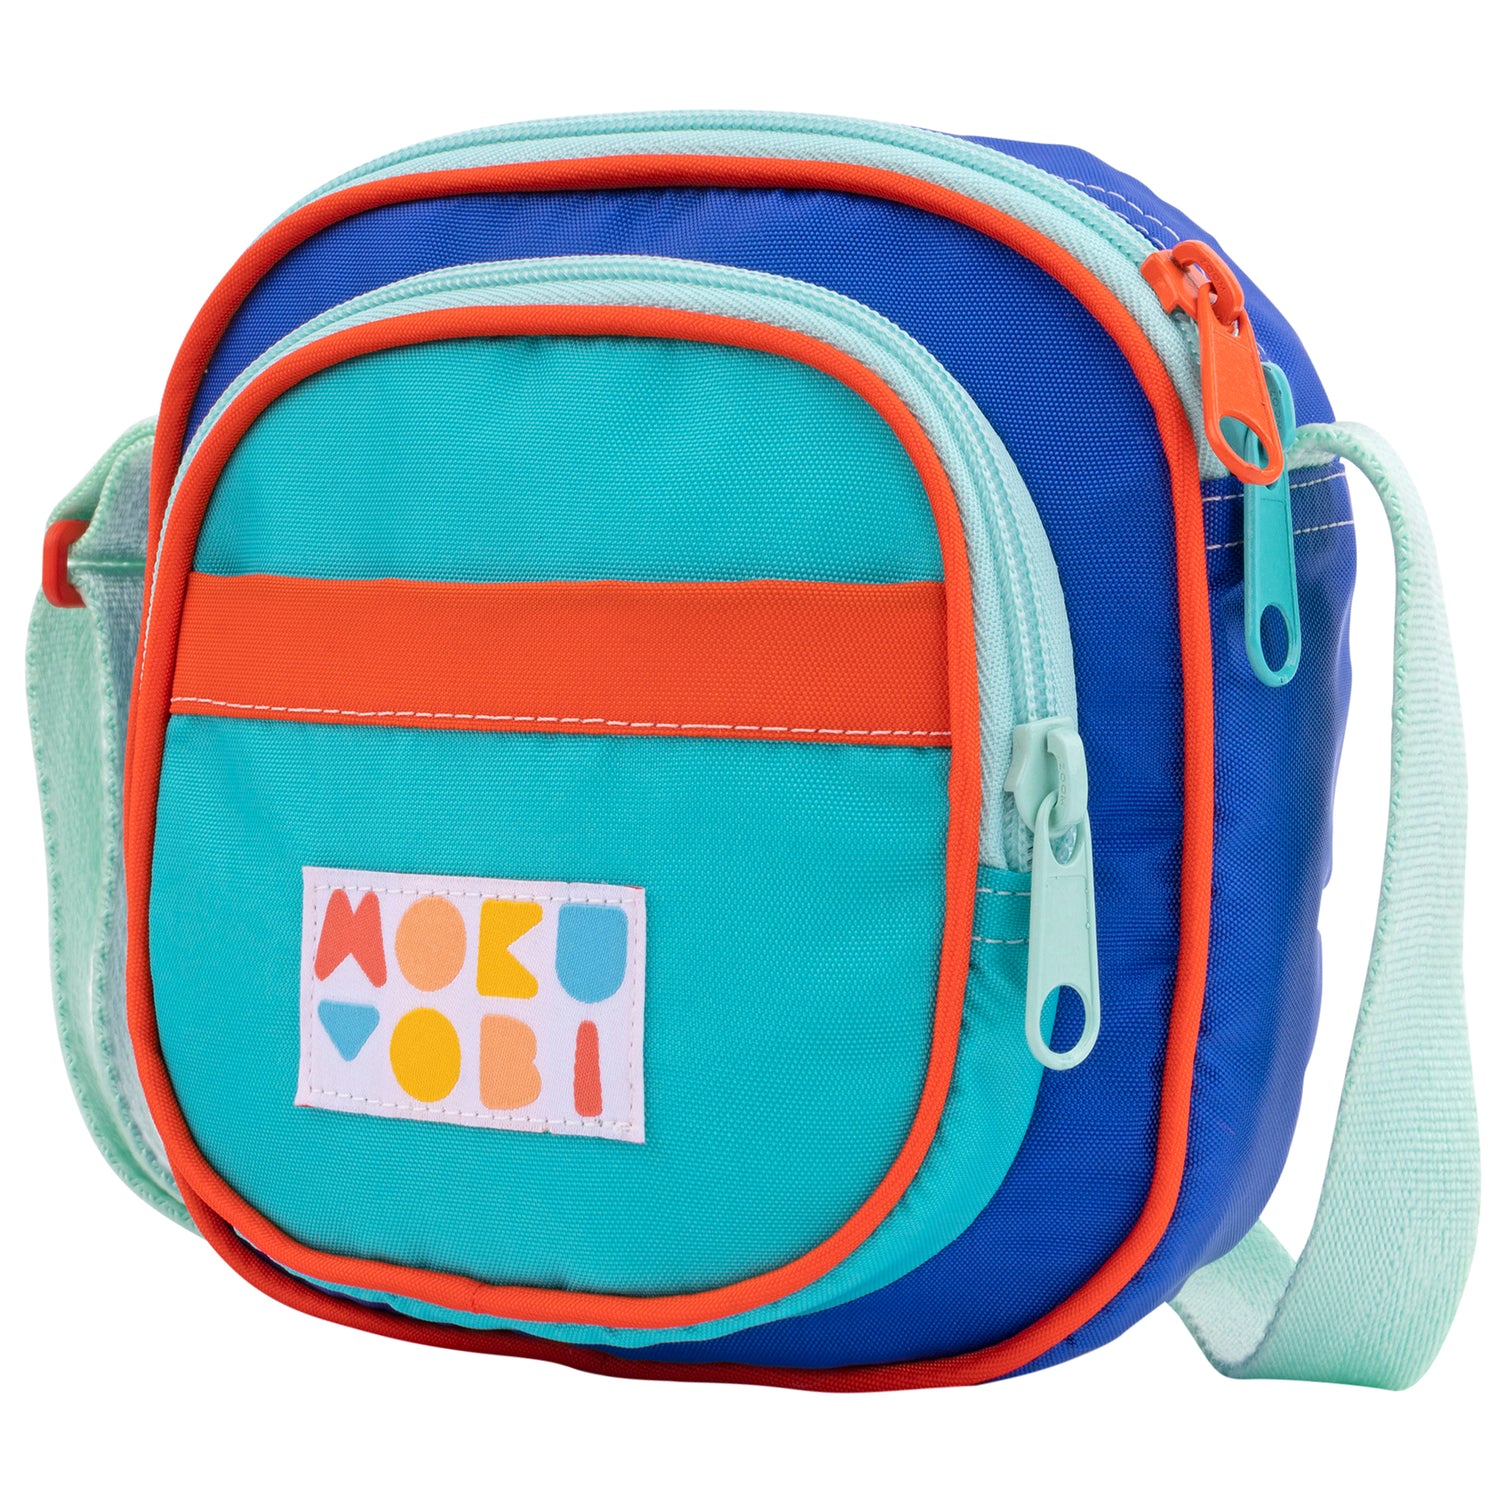 Semi circular, colorful retro bag with zipper pockets